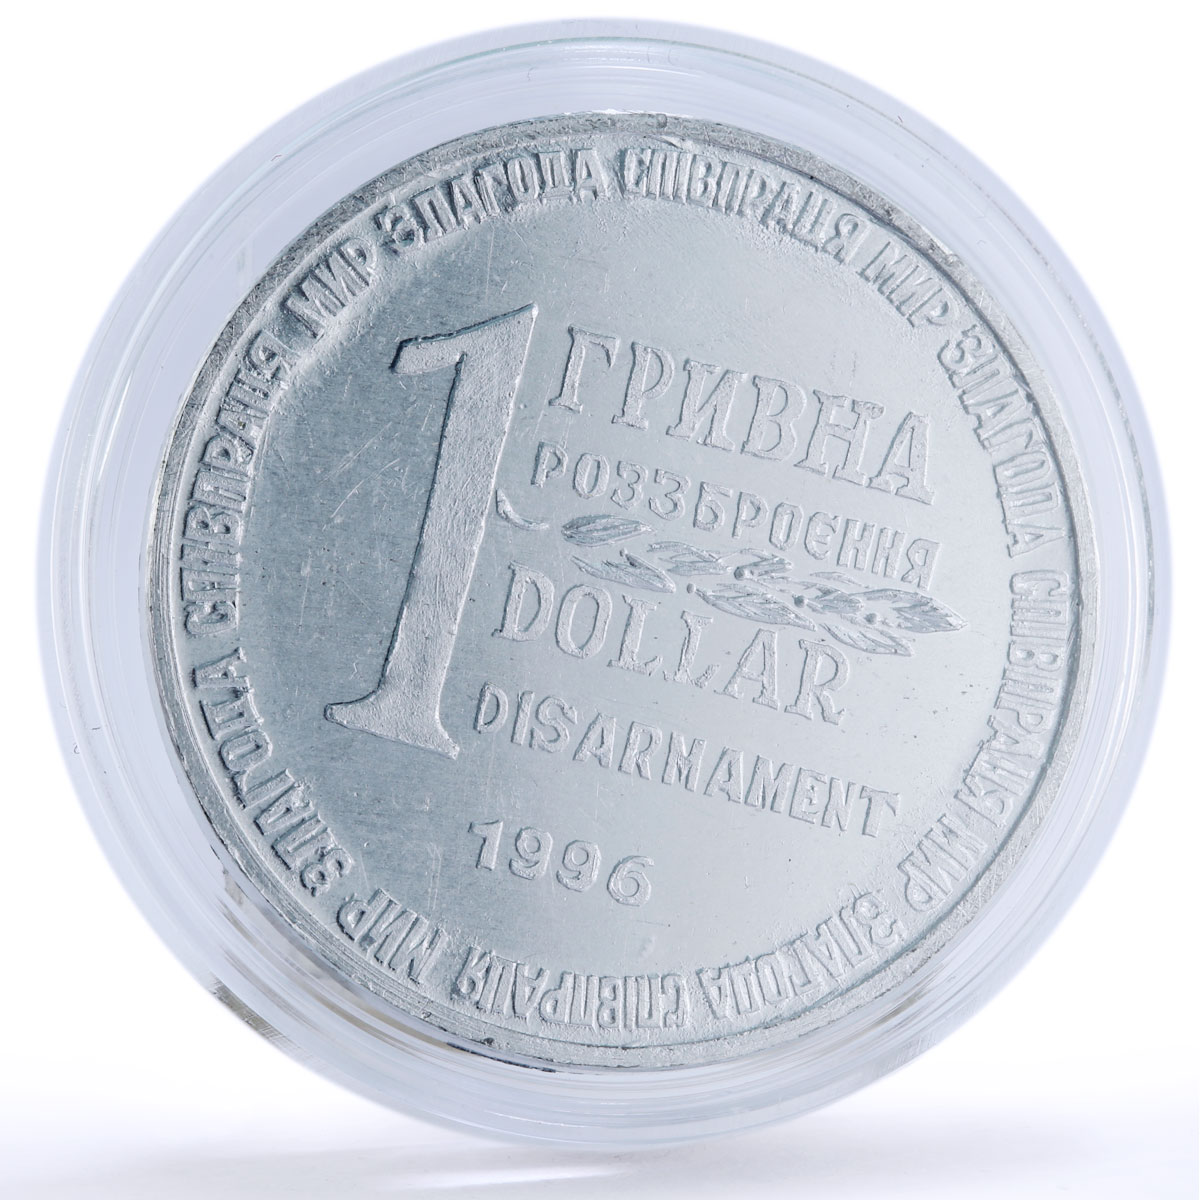 Ukraine 1 hryvnia dollar set of 2 coins Disarmament Al tokens 1996